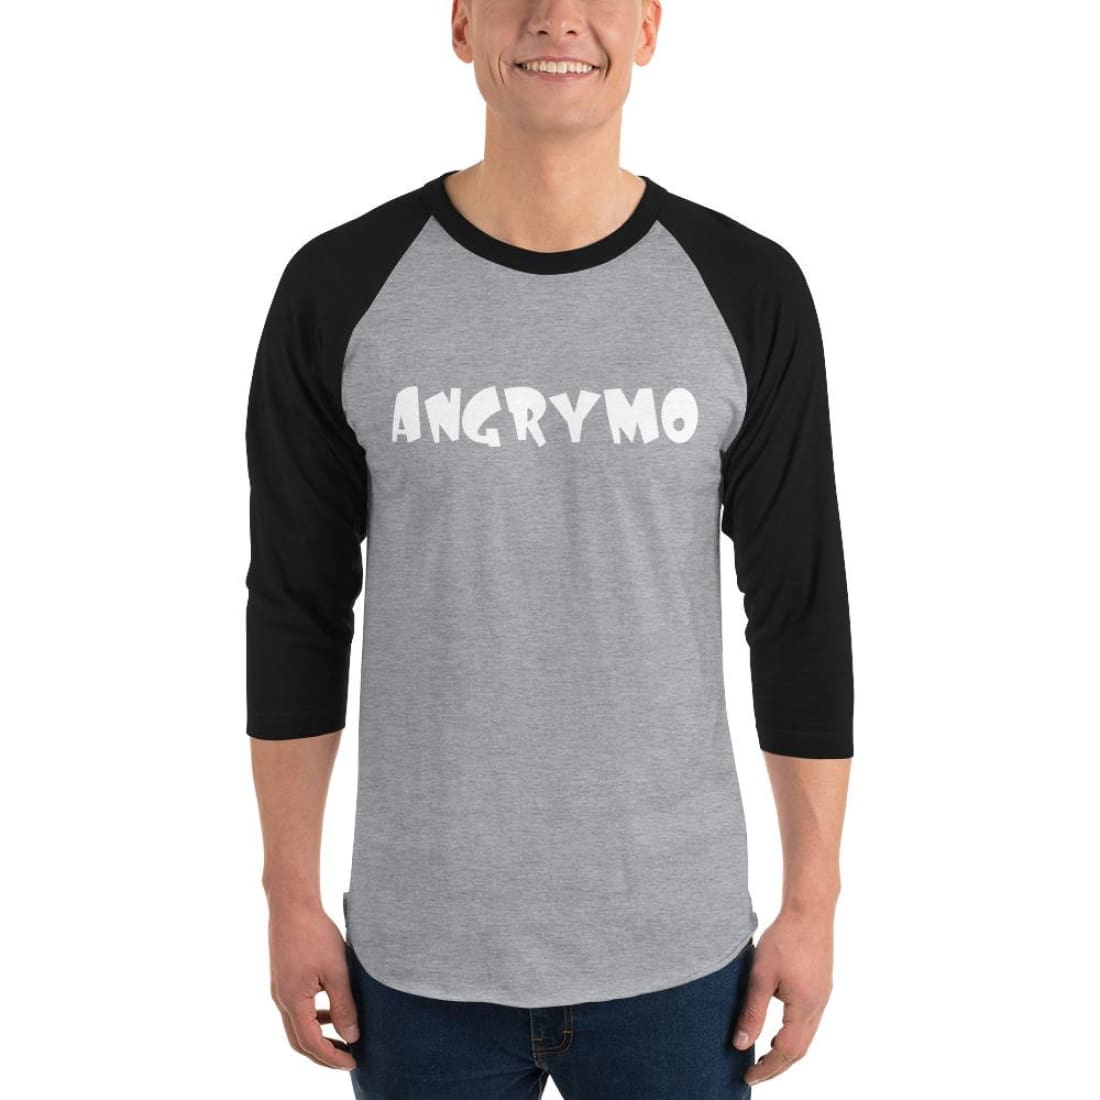 Angrymo 3/4 Sleeve Raglan Shirt - Heather Grey/black / Xs